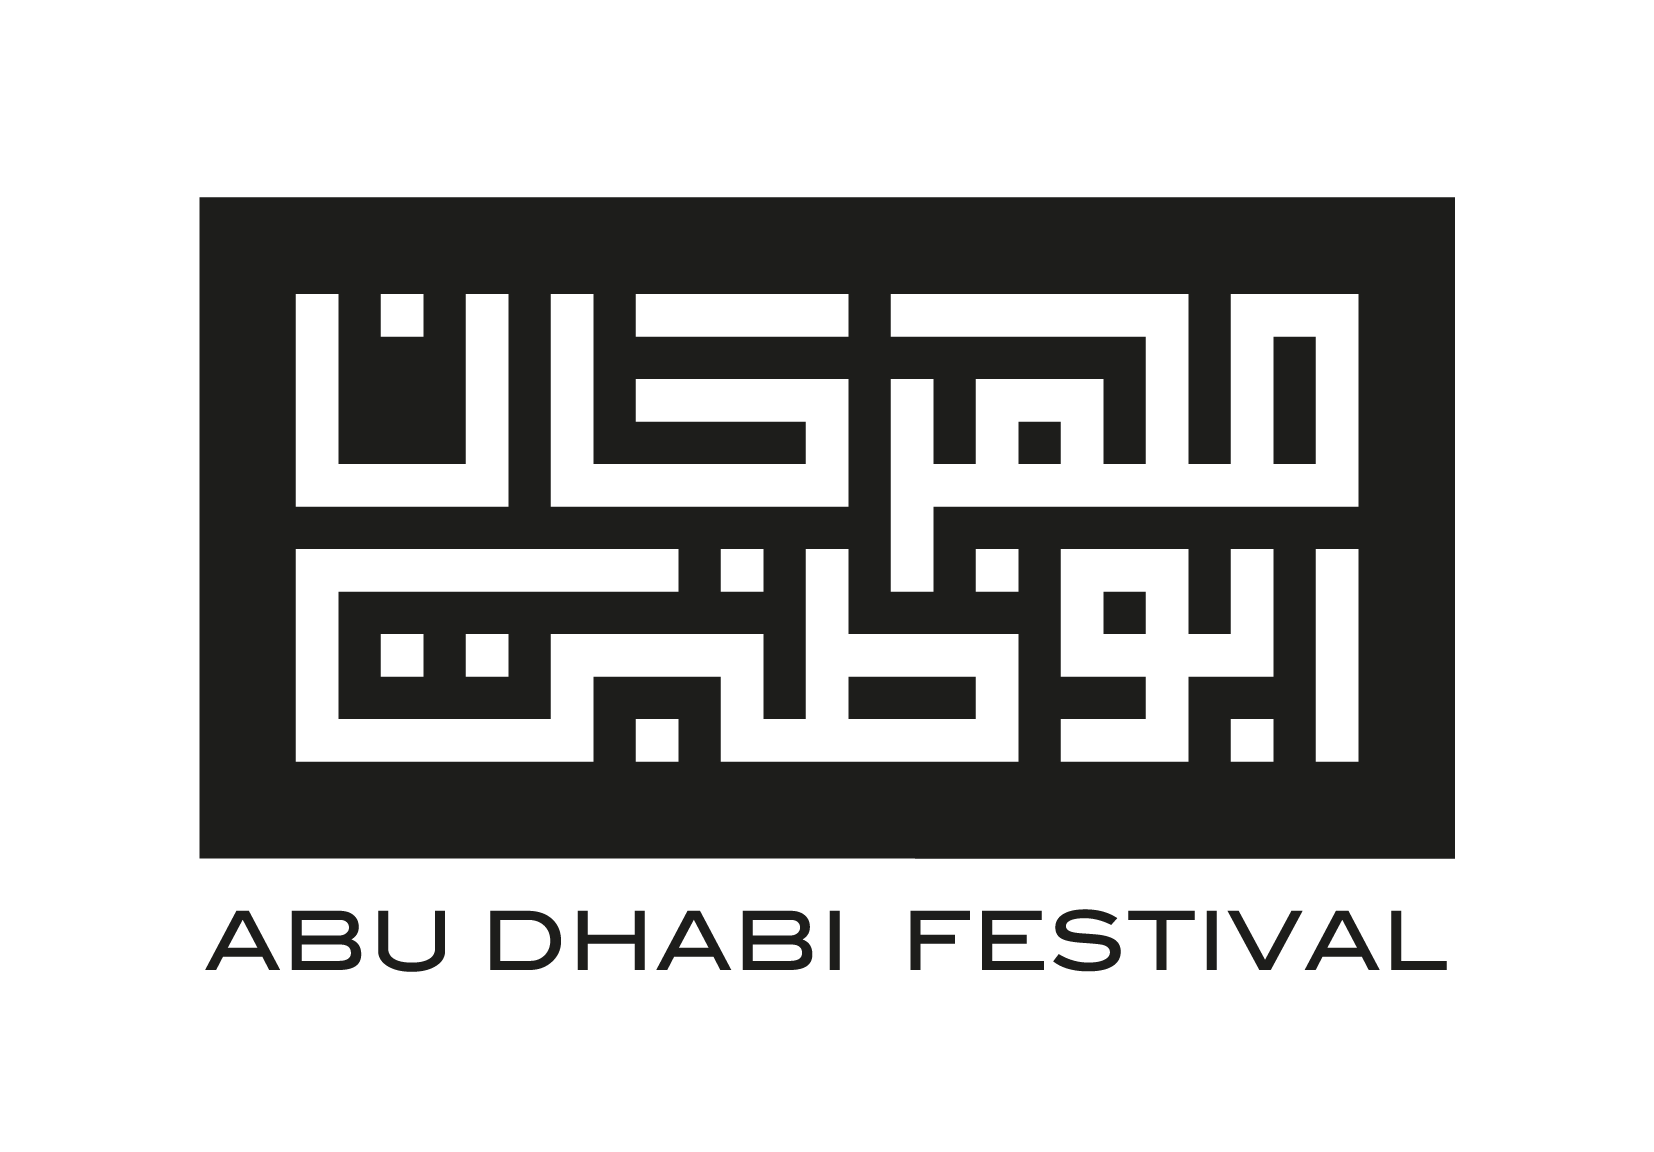 Abu Dhabi Festival - RBG